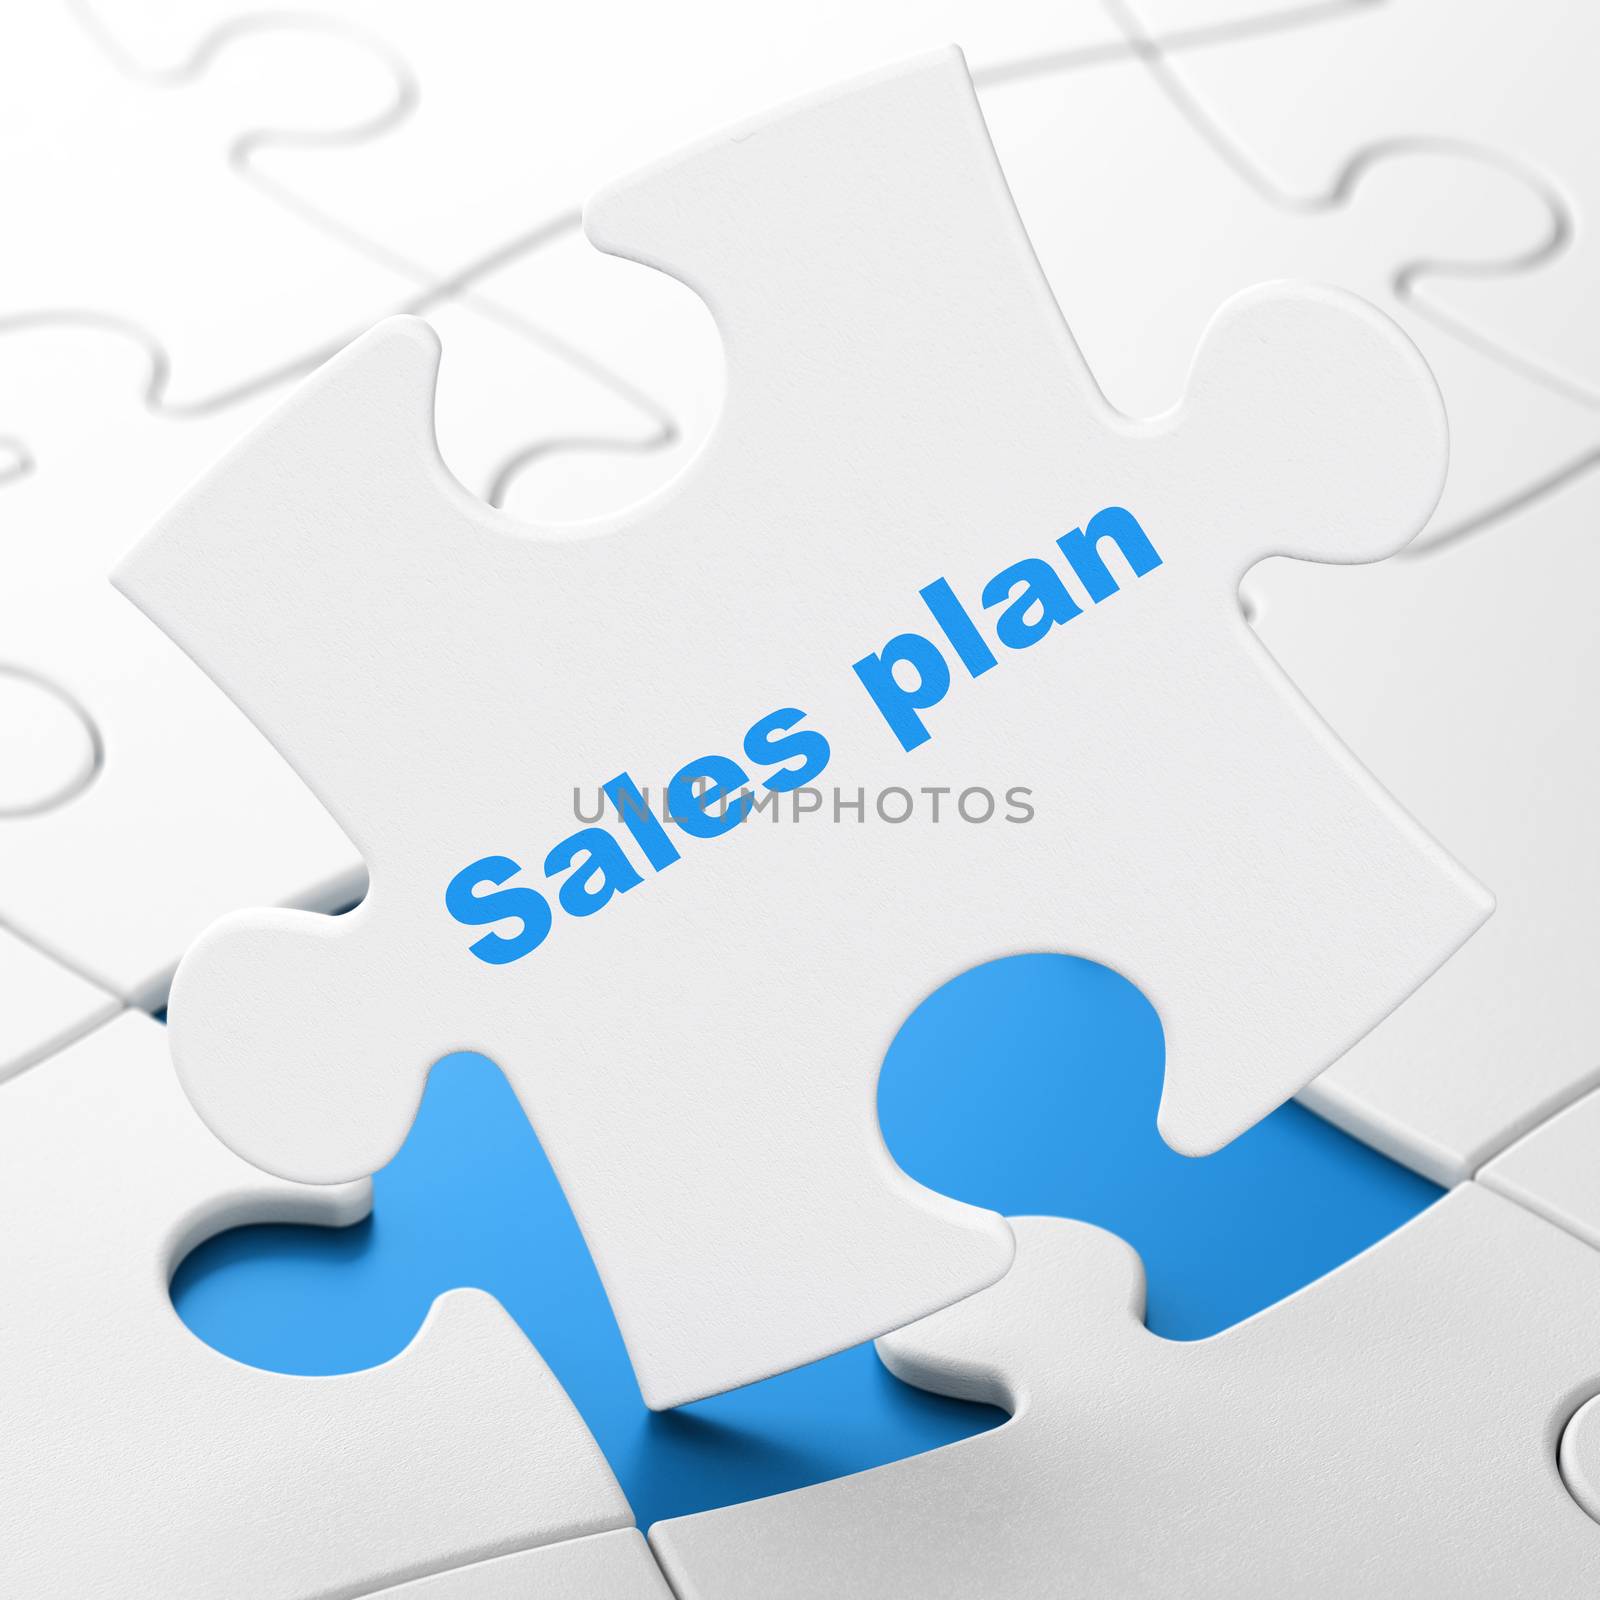 Marketing concept: Sales Plan on White puzzle pieces background, 3d render